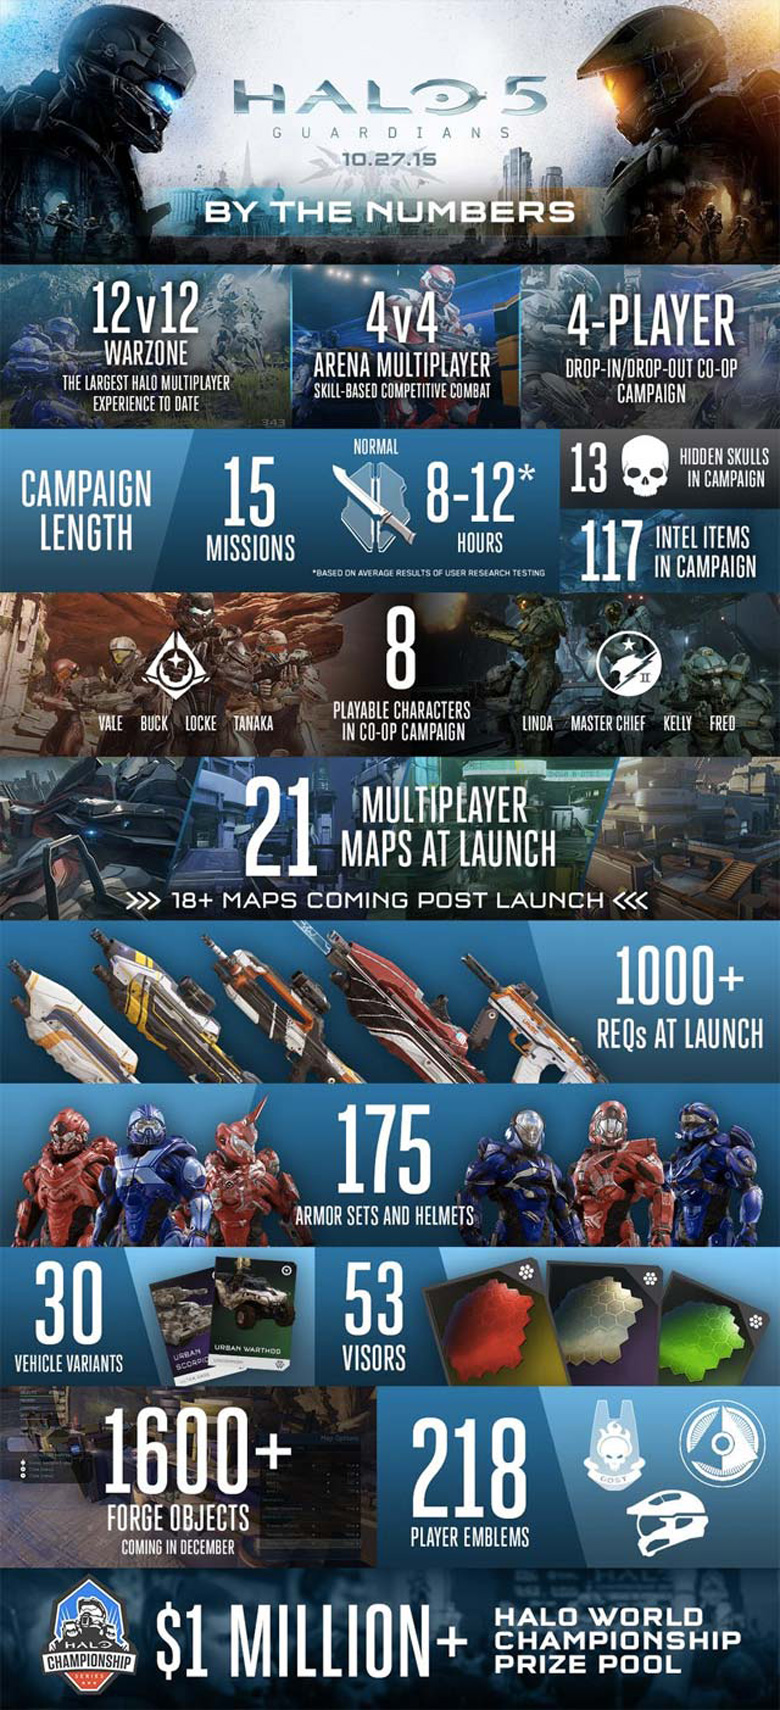 Halo 5 Guardians 